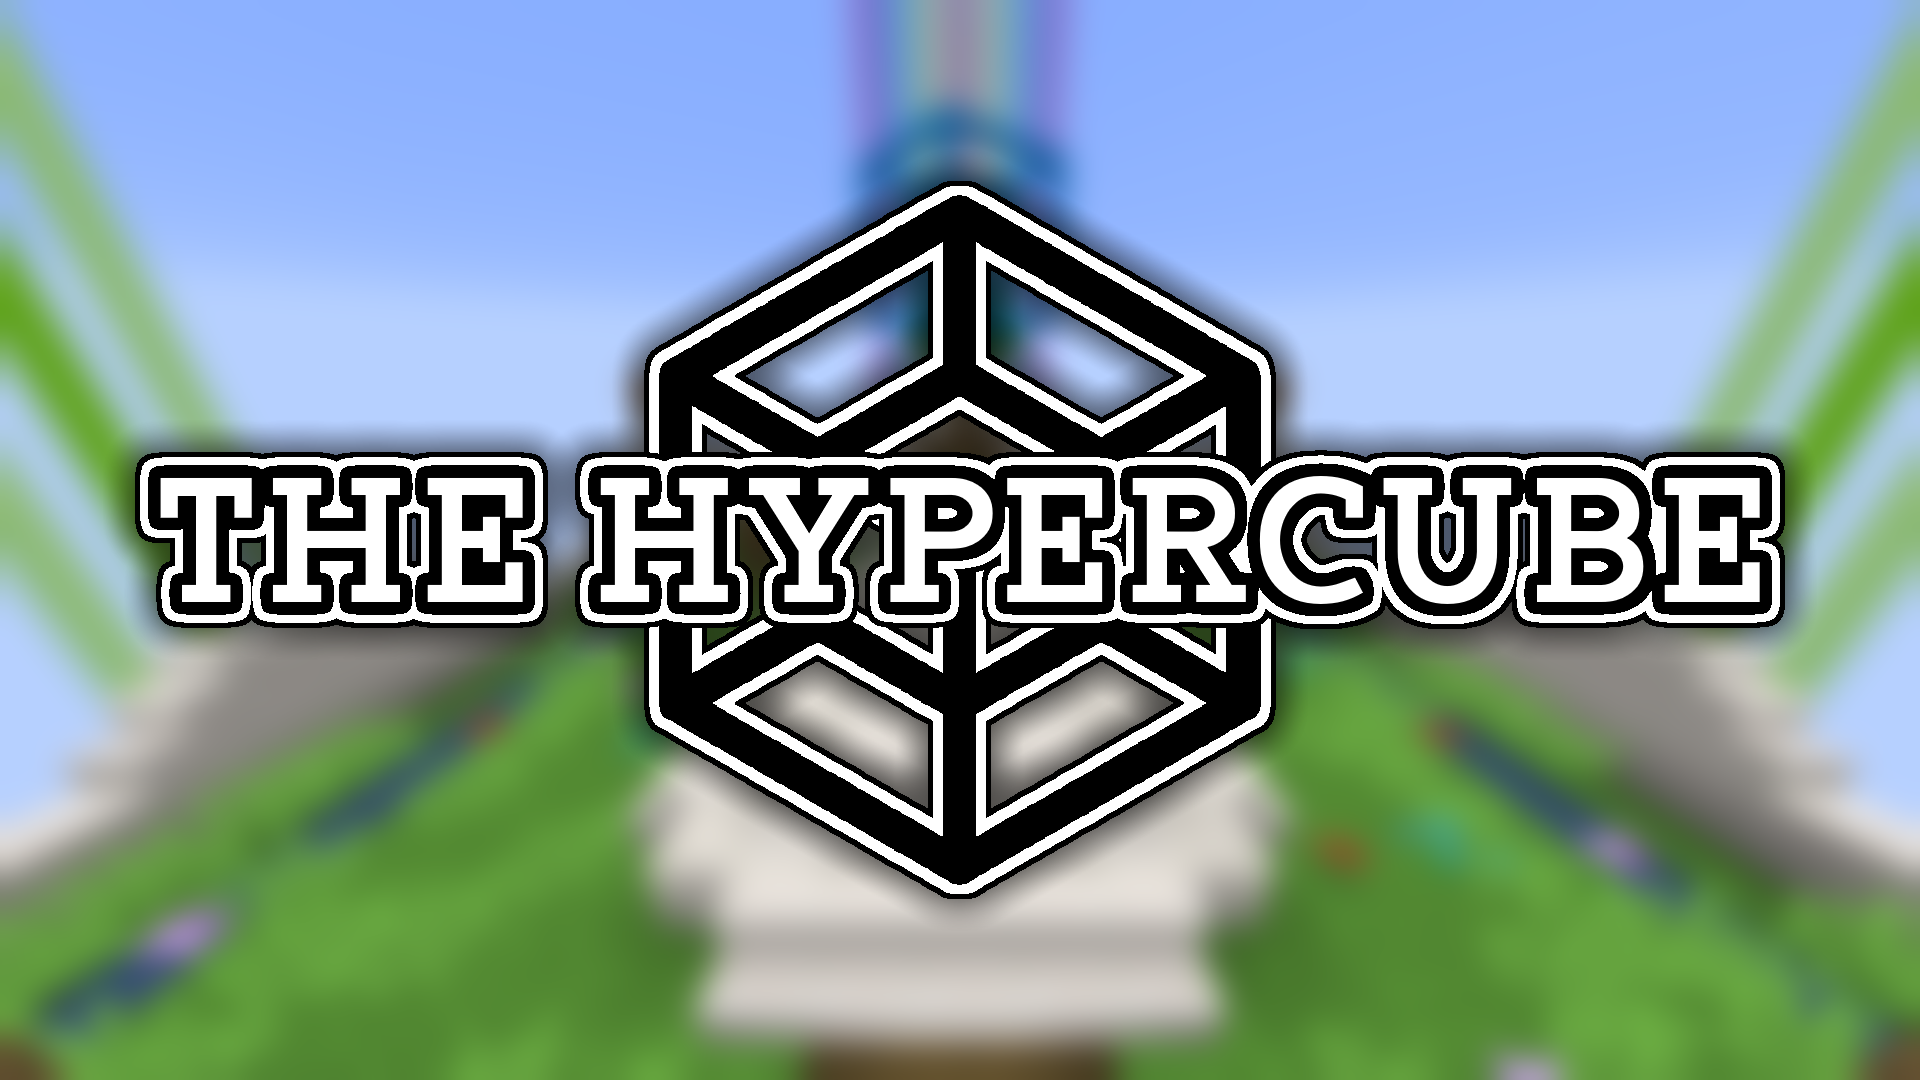 Tải về The Hypercube cho Minecraft 1.14